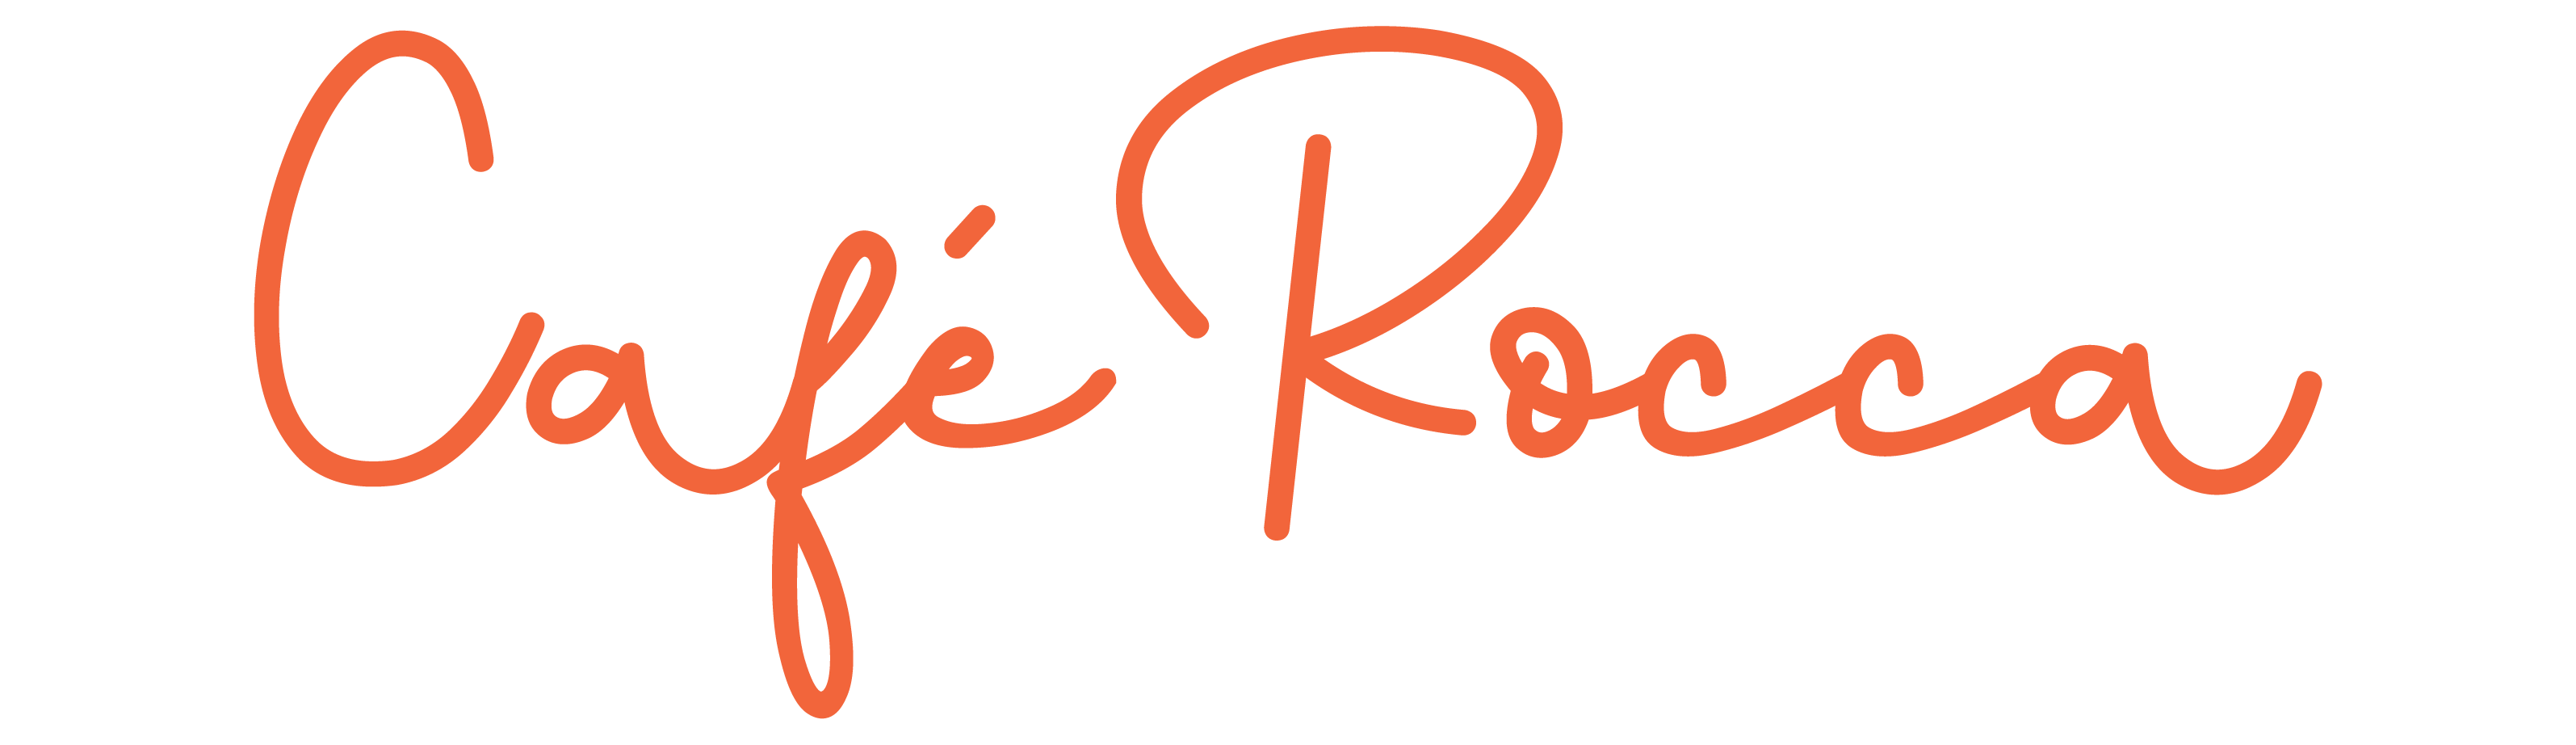 Café Rocca